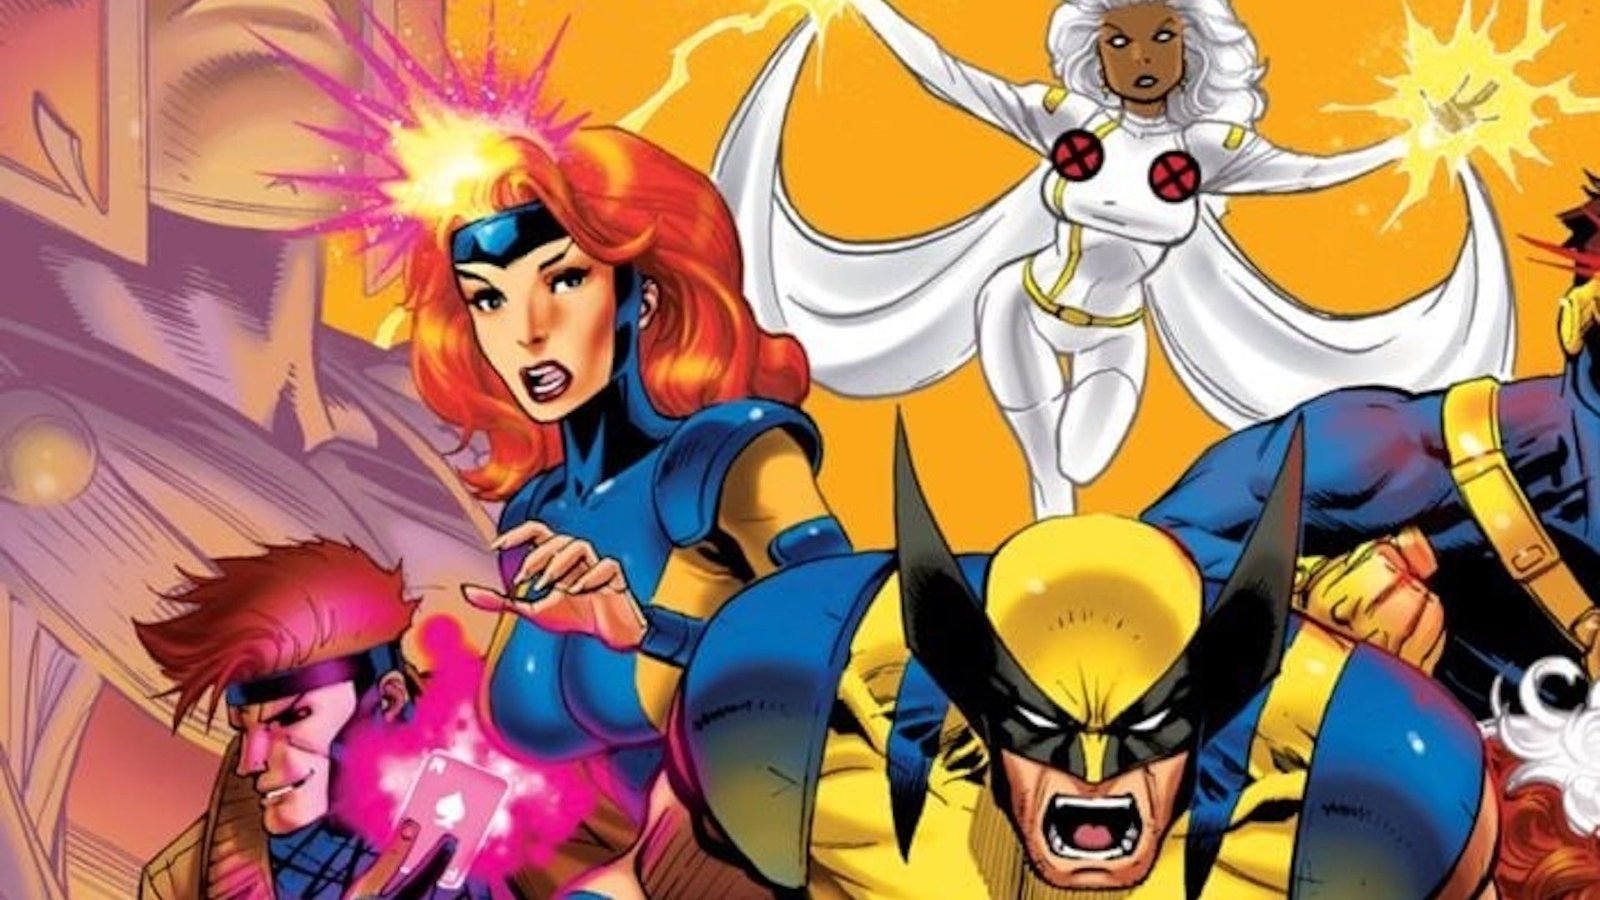 X-men: The Animated Series